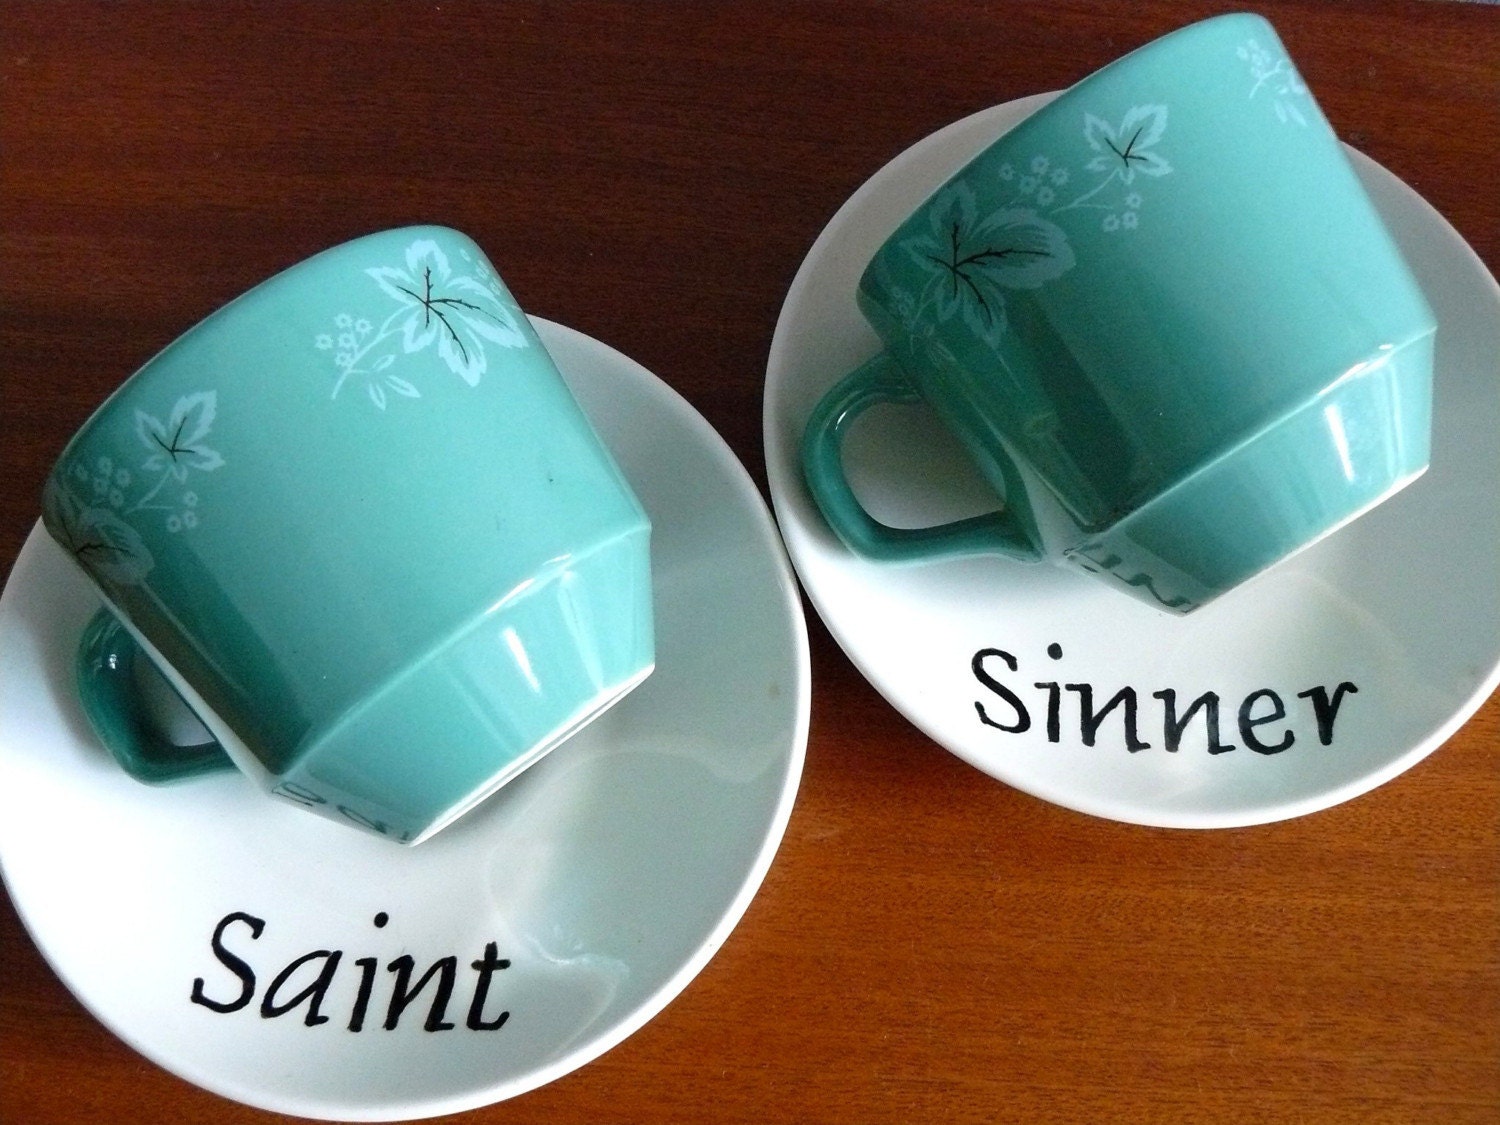 Sinner Saint teacup duo